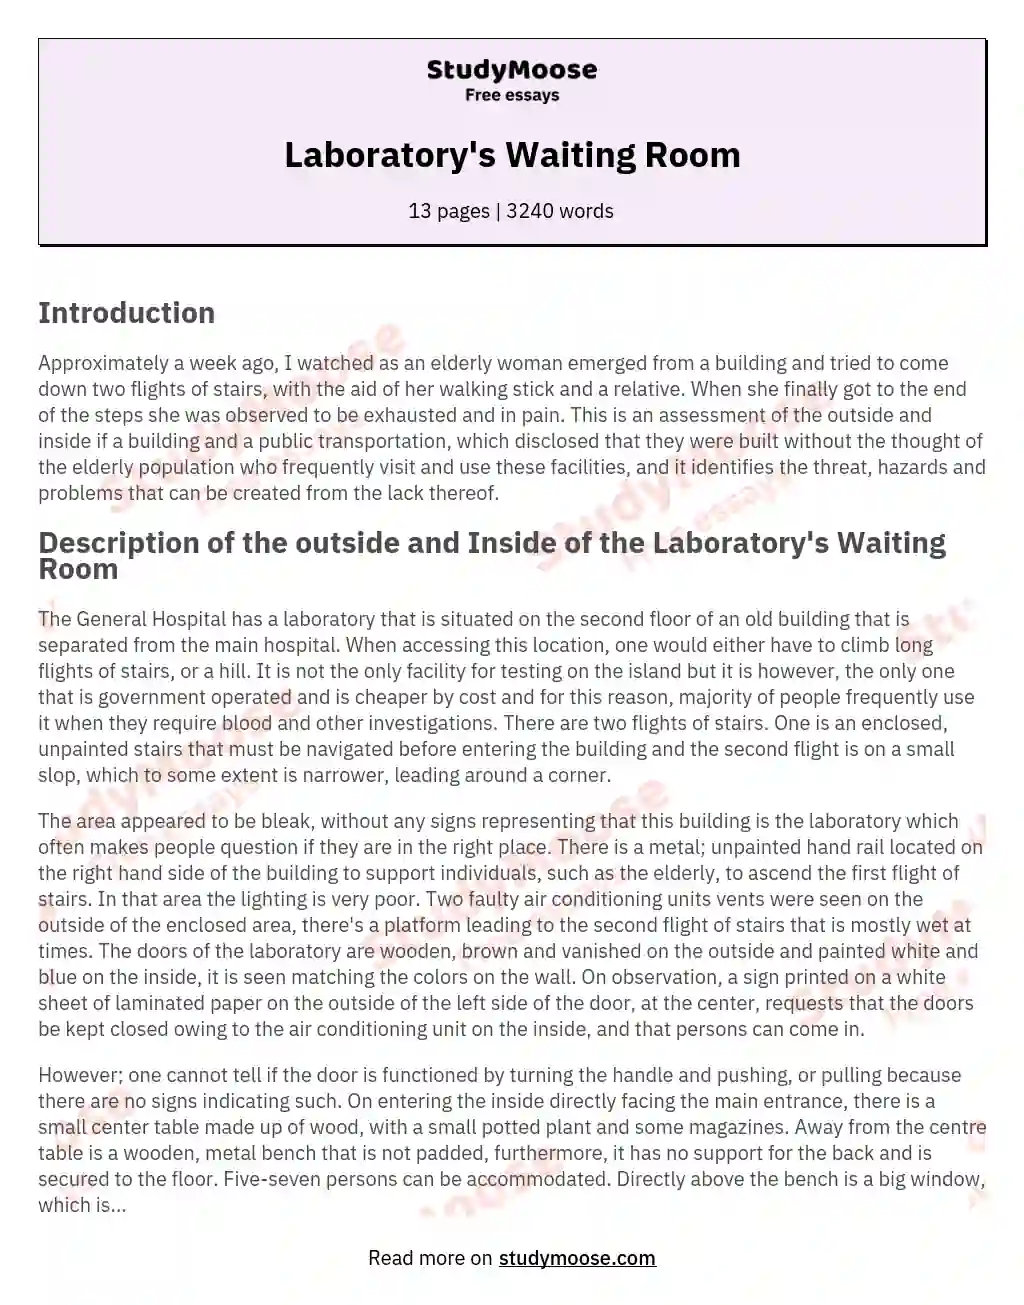 Laboratory's Waiting Room essay